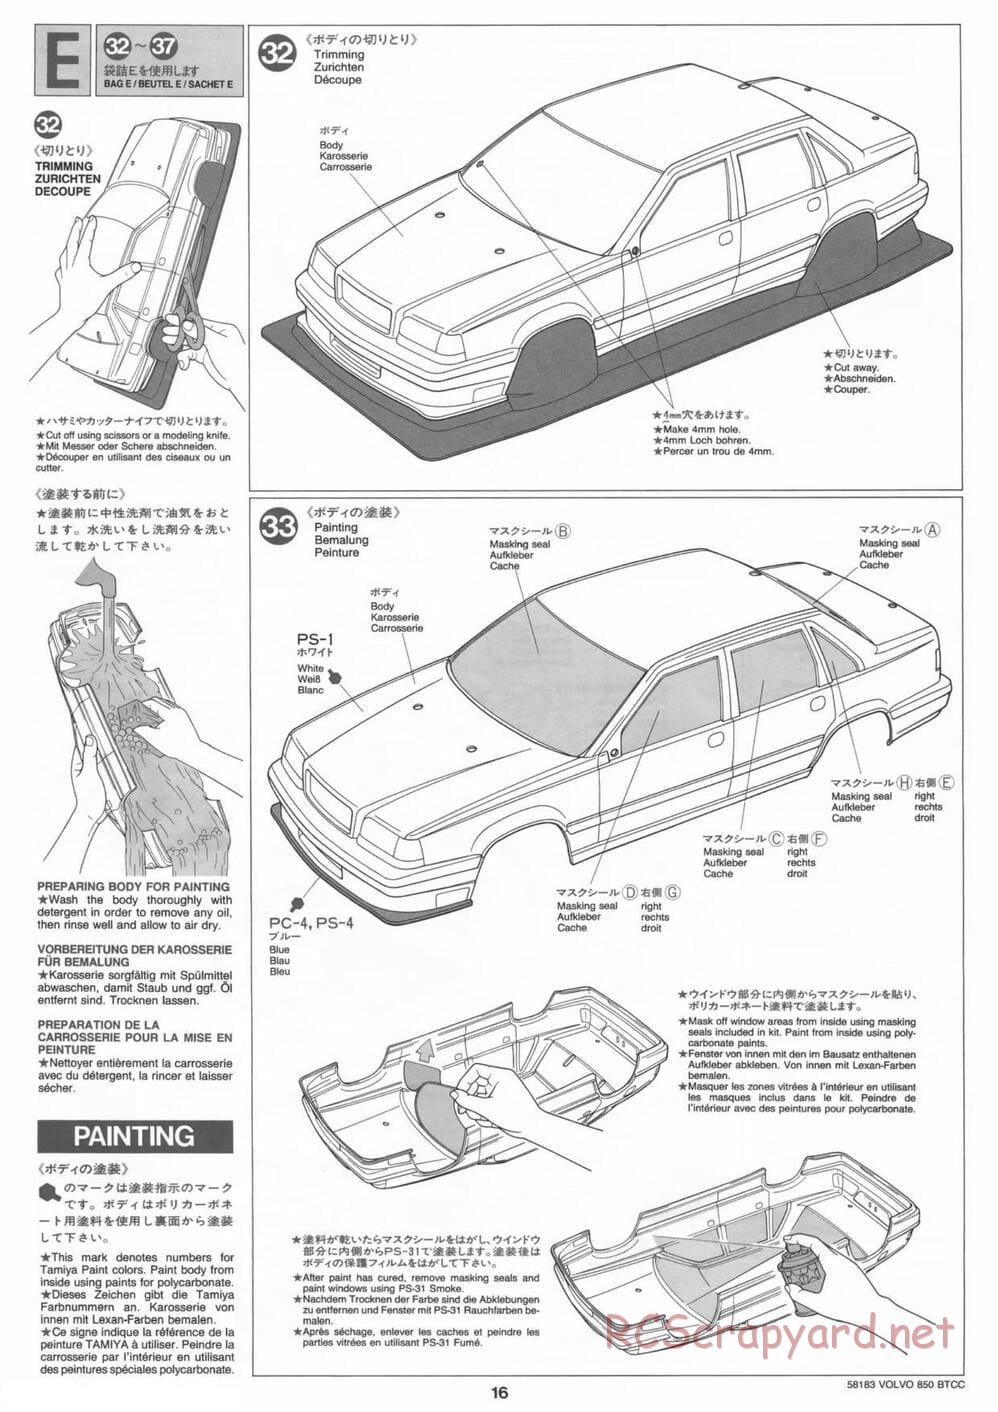 Tamiya - Volvo 850 BTCC - FF-01 Chassis - Manual - Page 16